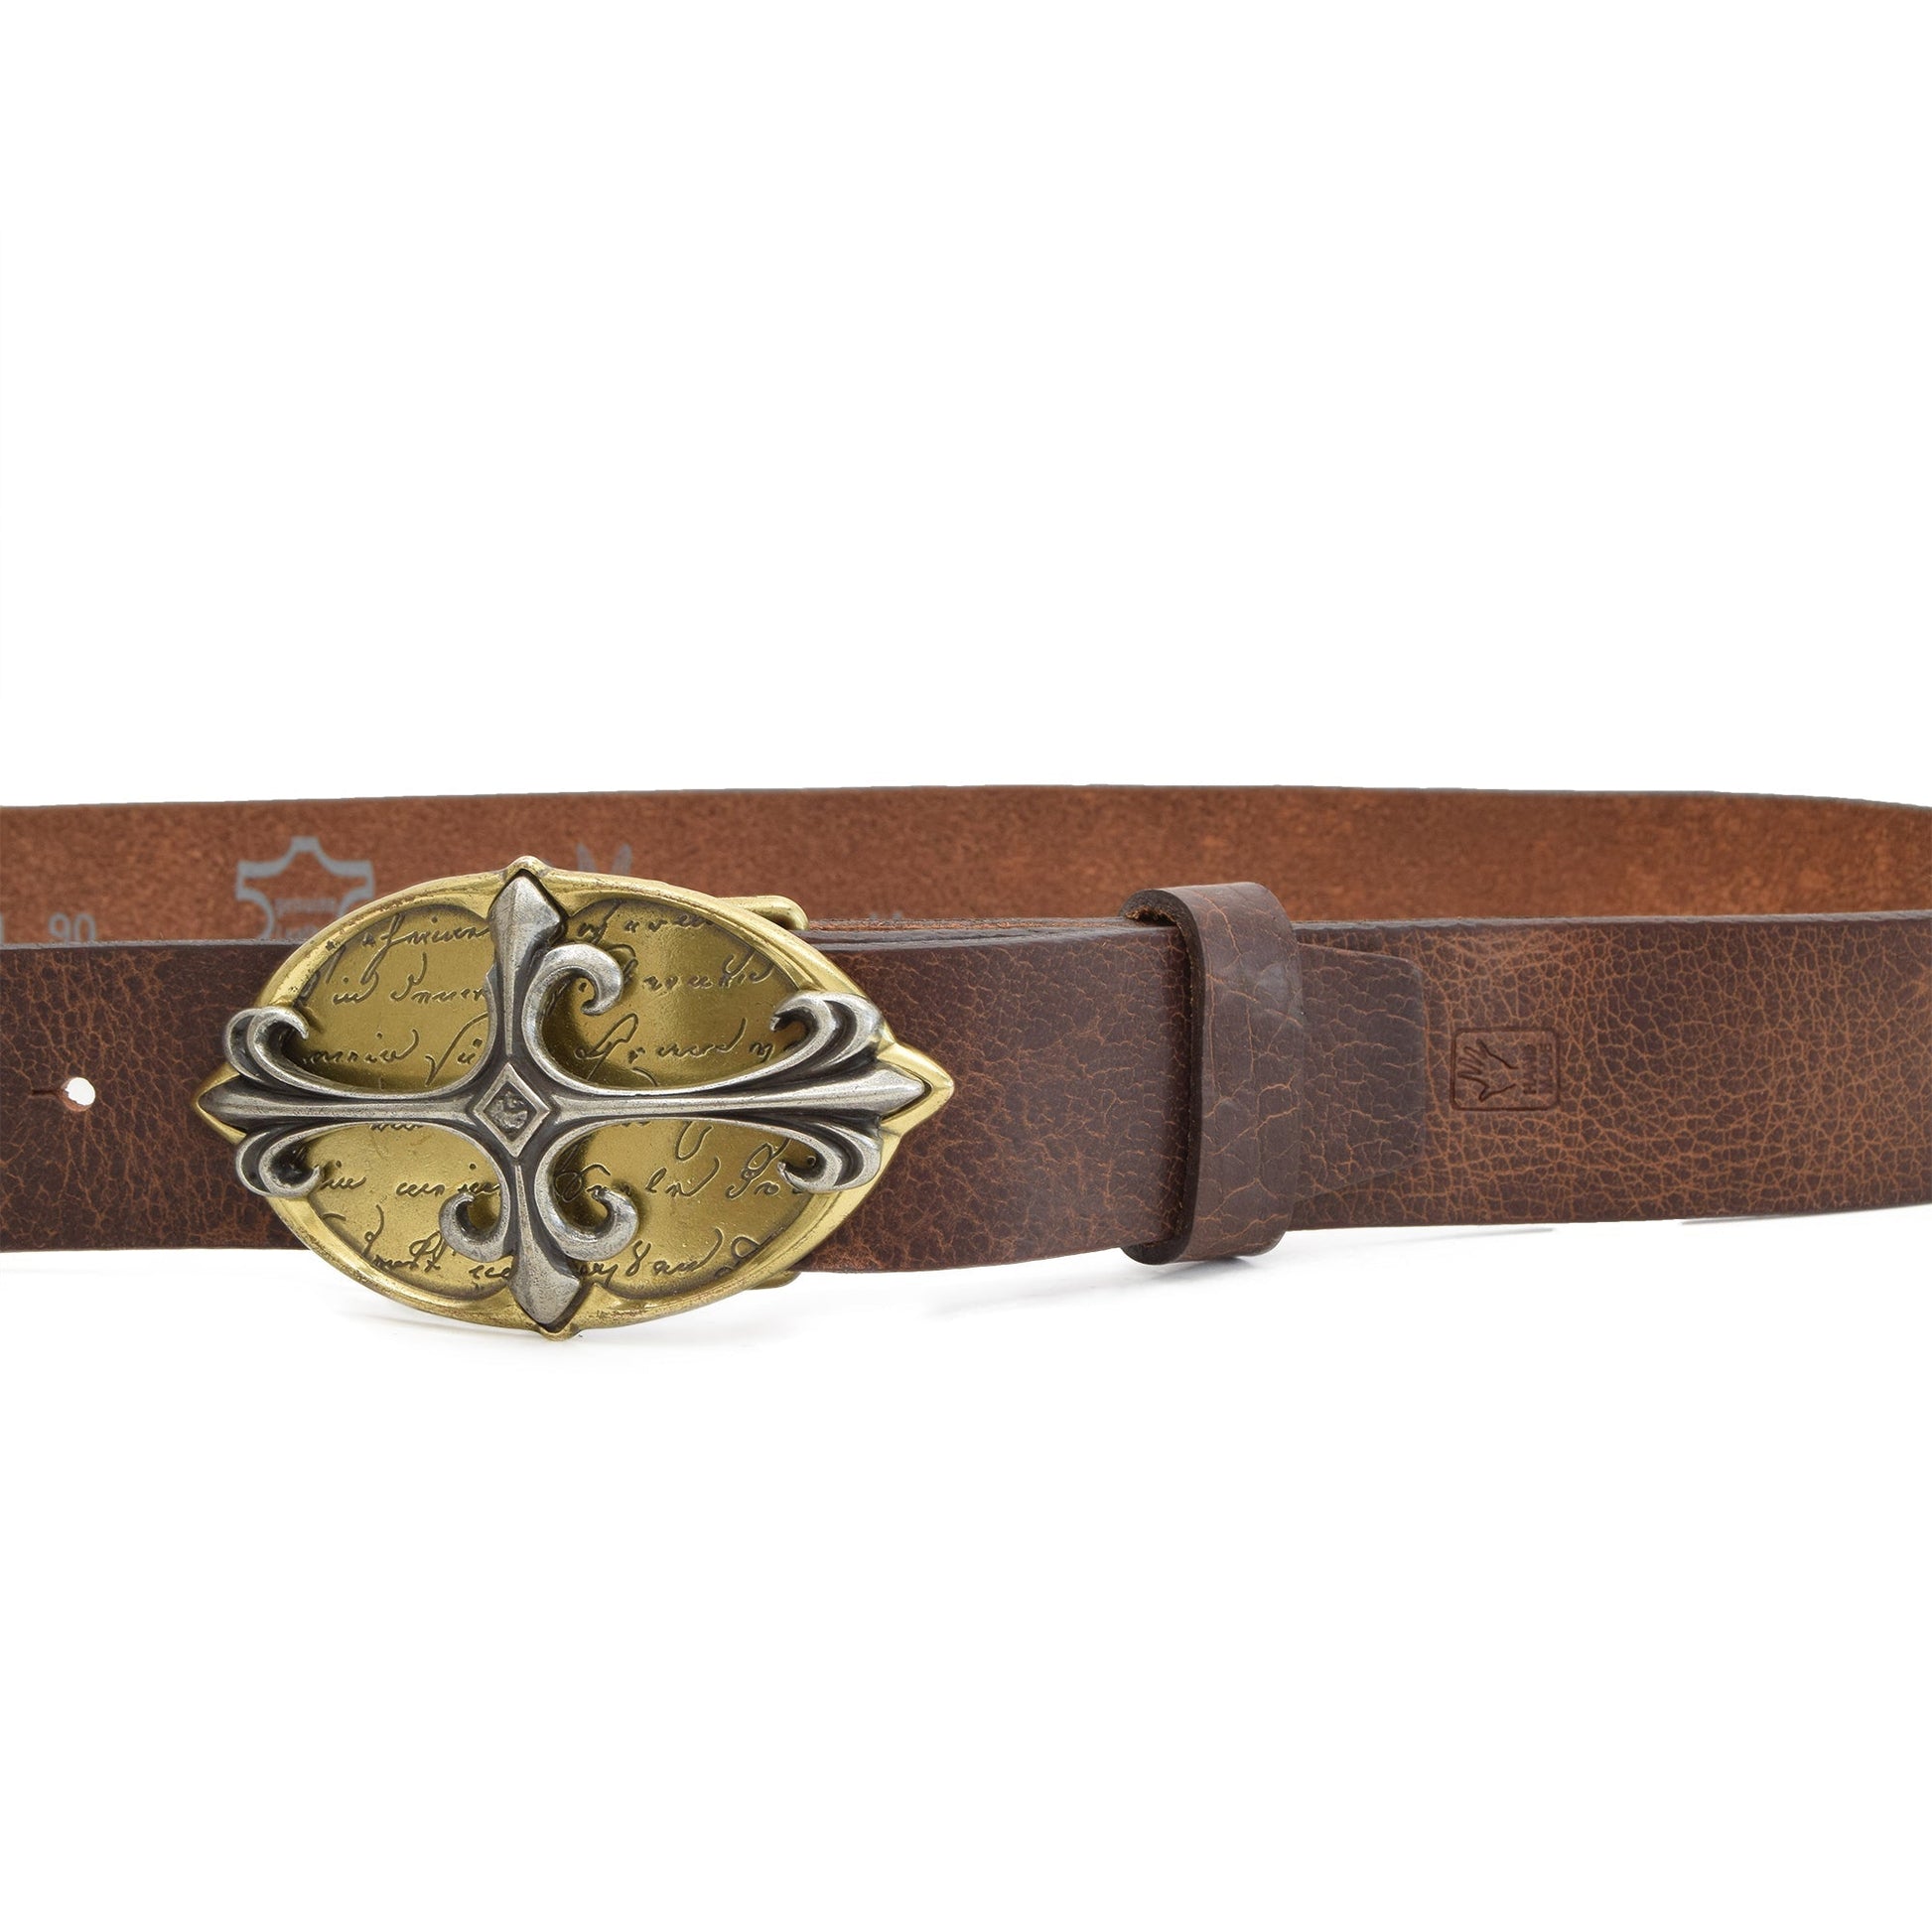 Viva Leather Belt Brown with Changeable Buckle - Belts Zengoda Shop online from Artisan Brands